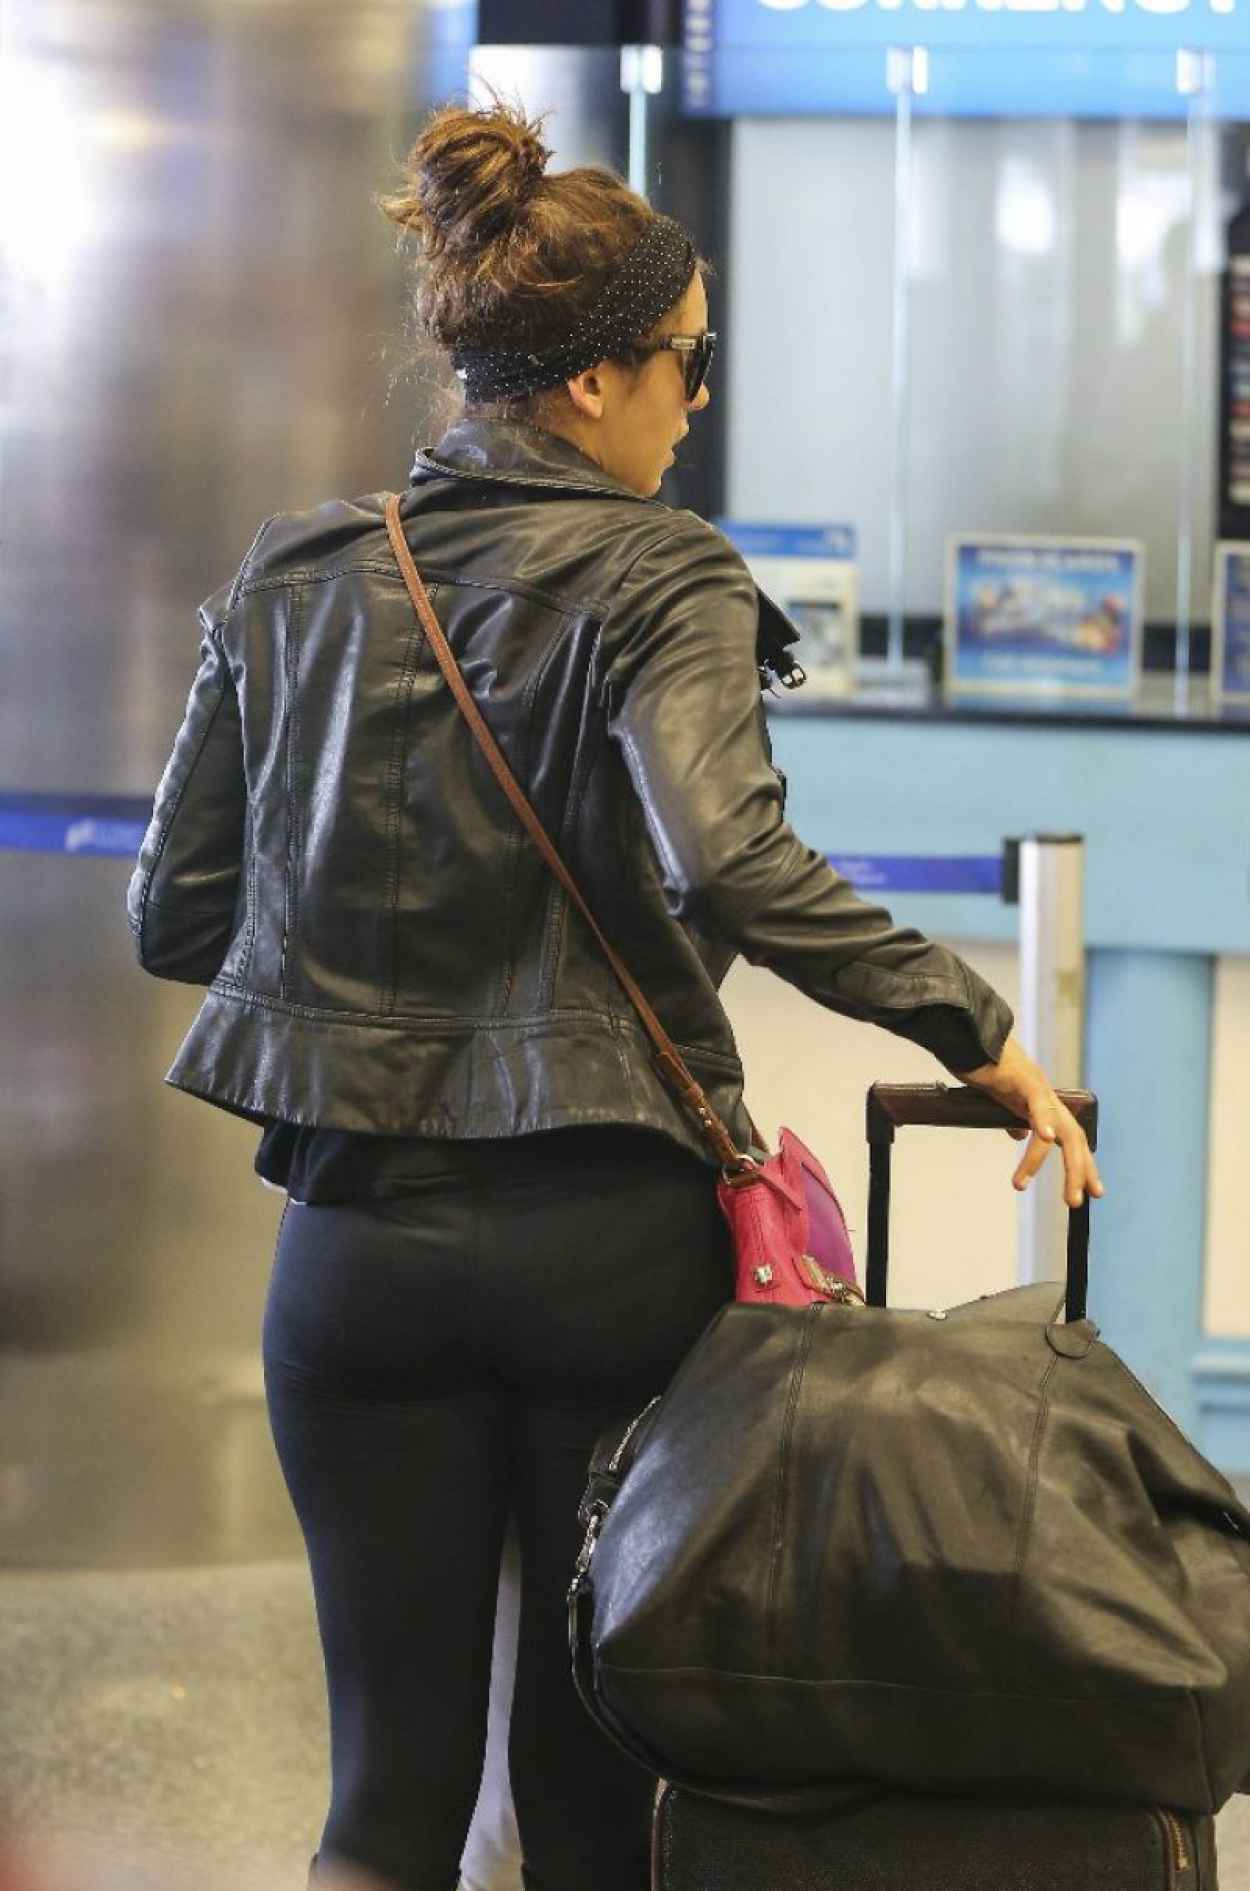 Nina Dobrev - Booty in Tights at LAX Airport - March 2015.